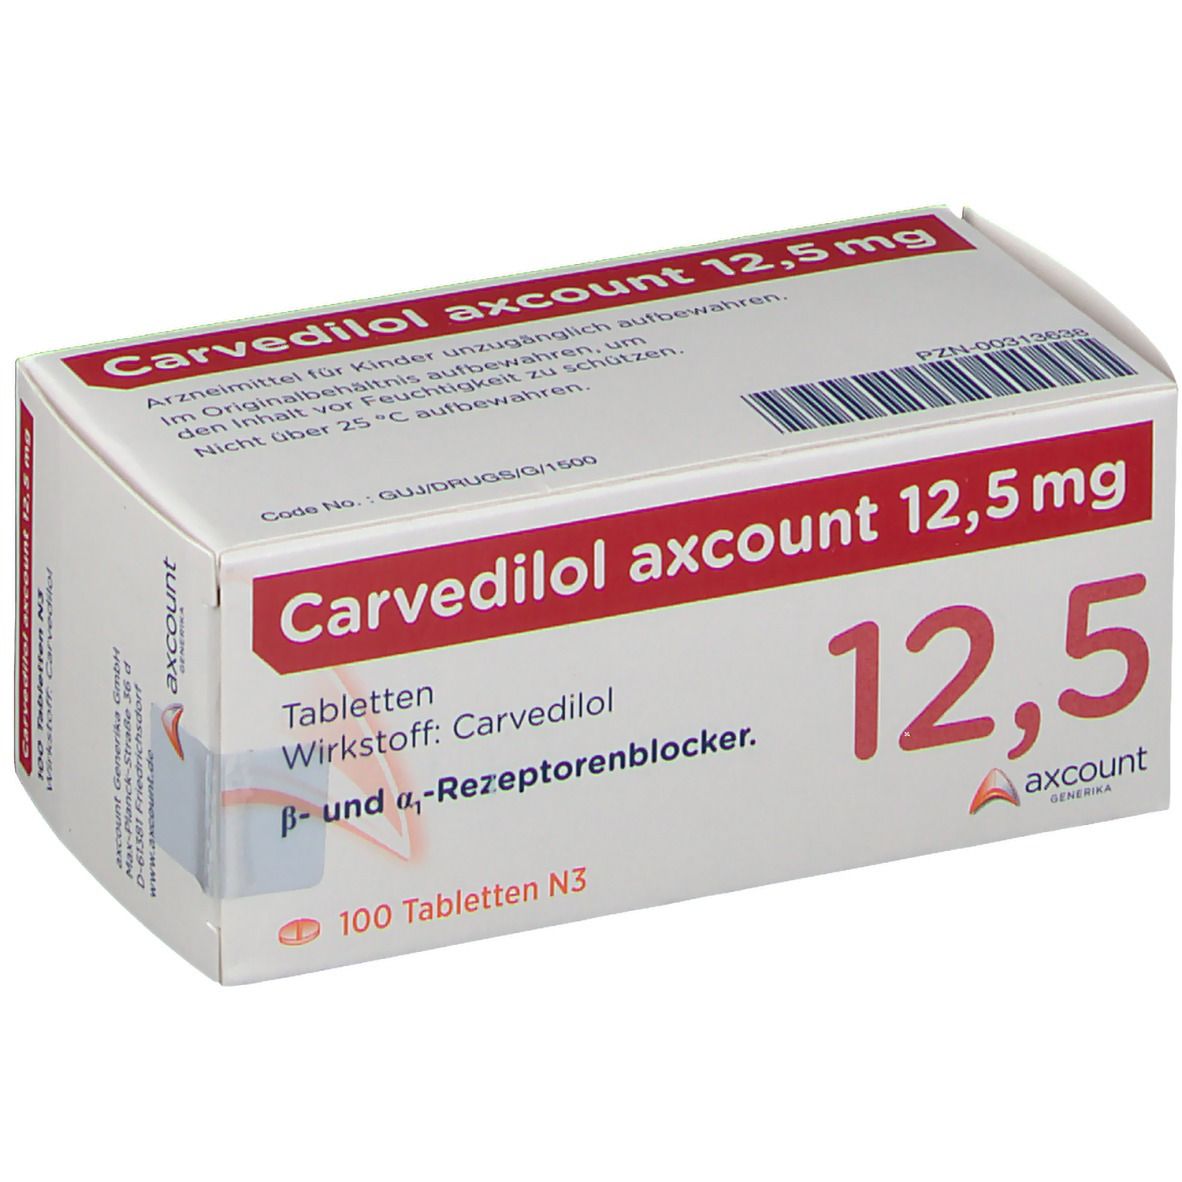 Carvedilol axcount 12,5 mg